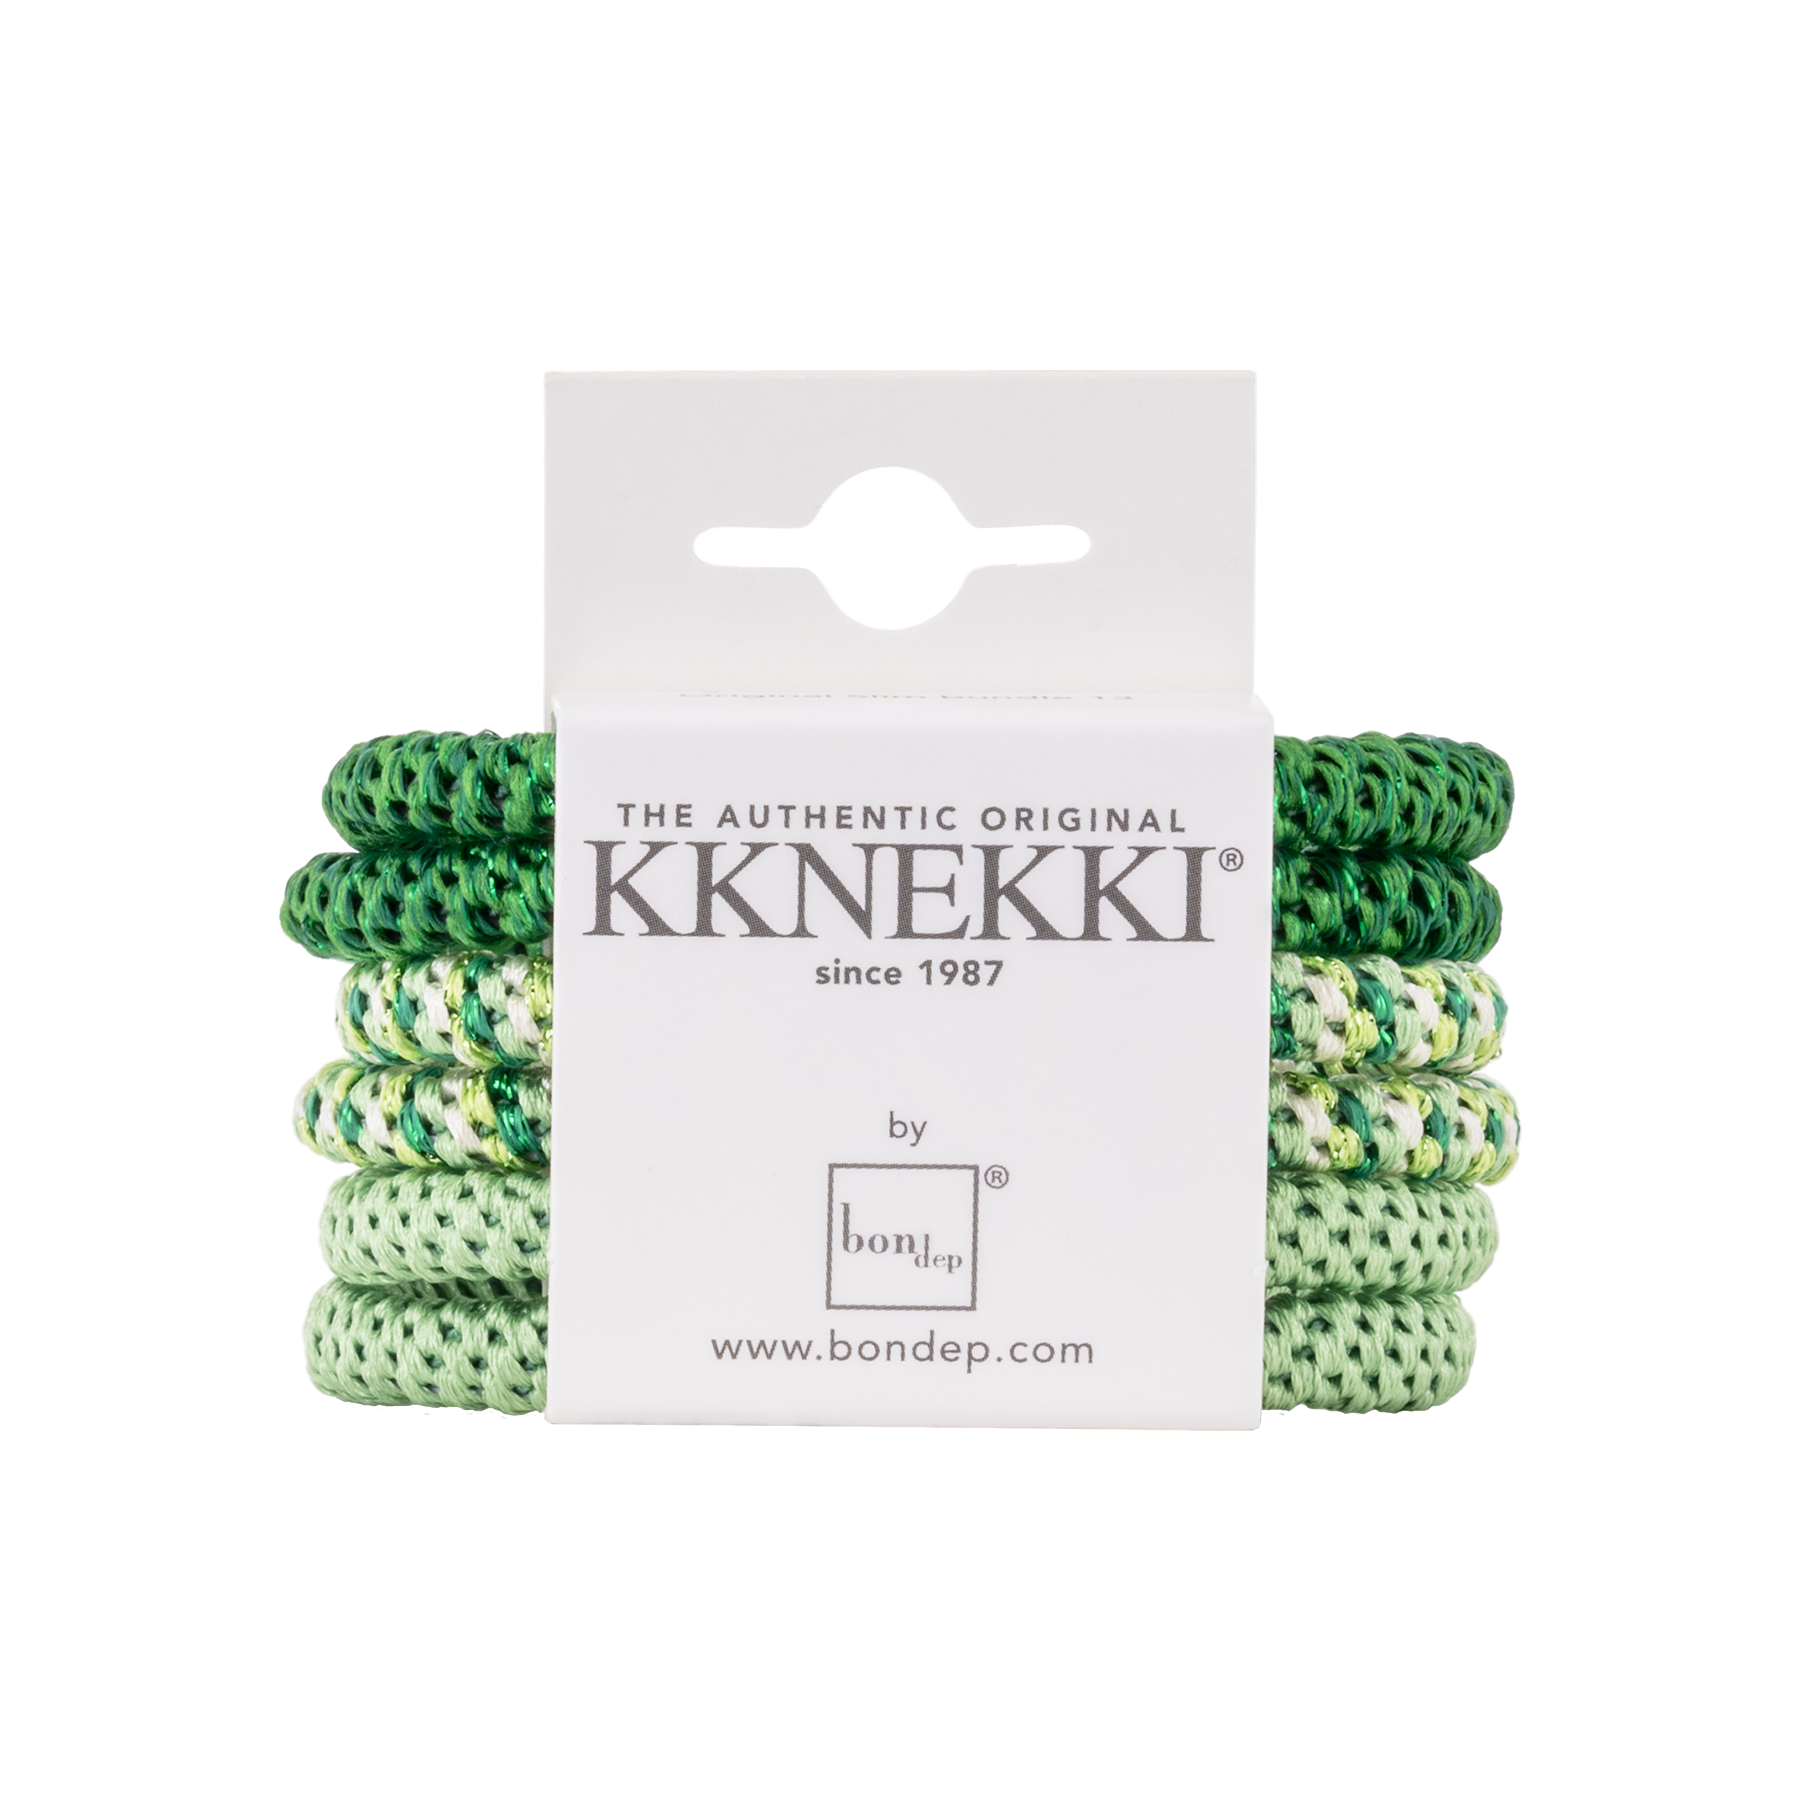 Image of Kknekki Slim Bundle 13 • 6pcs x 25  from Kknekki original hair ties